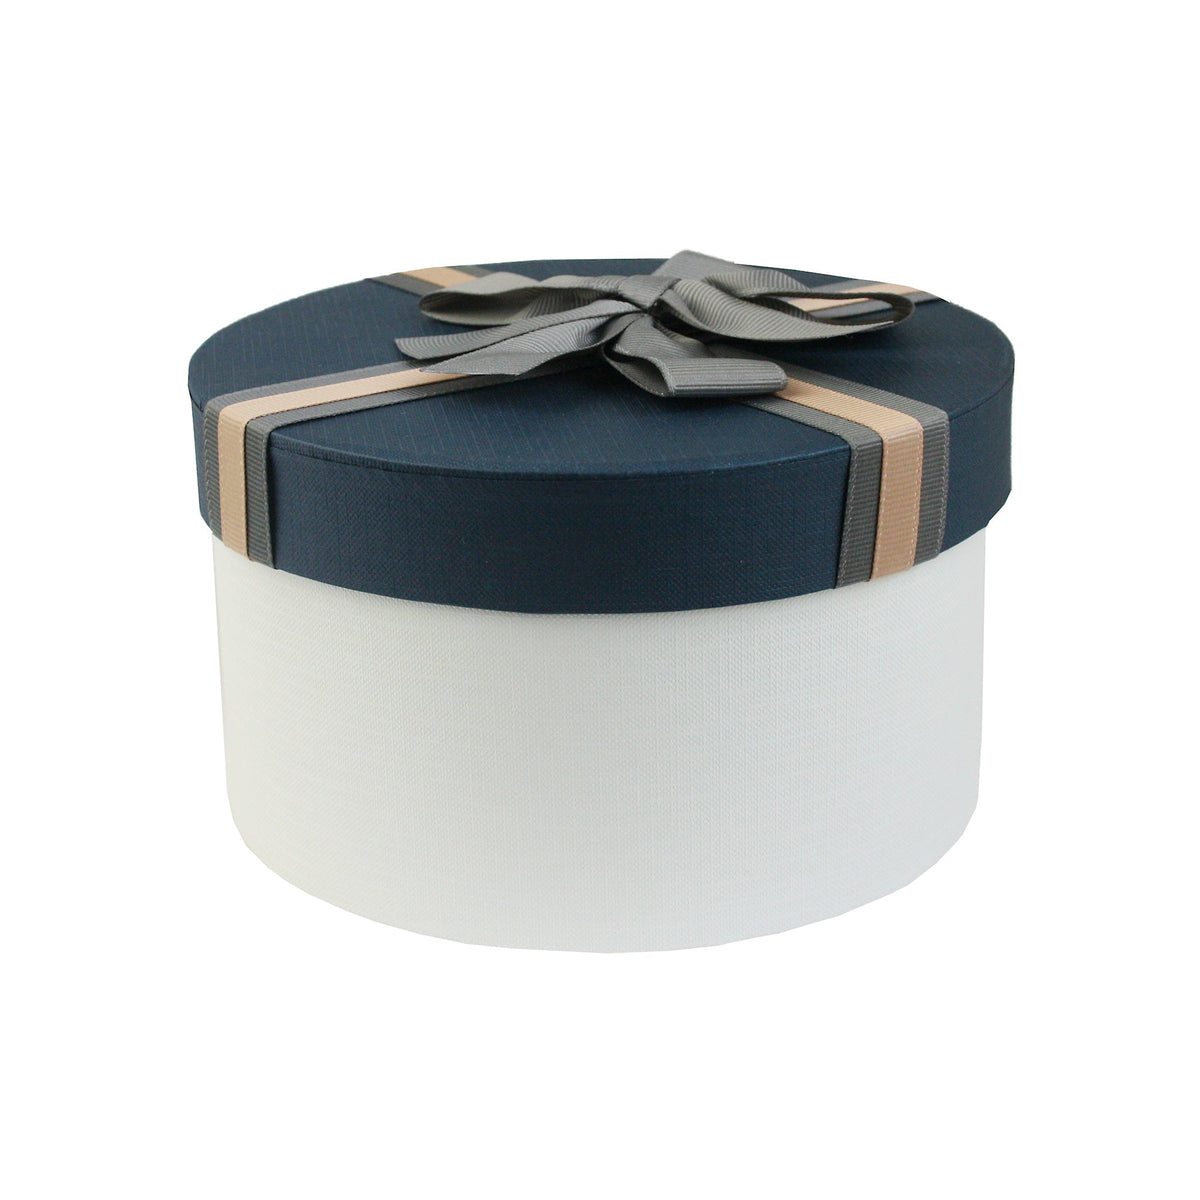 Single Cream/Blue Gift Boxes With Grey Satin Ribbon